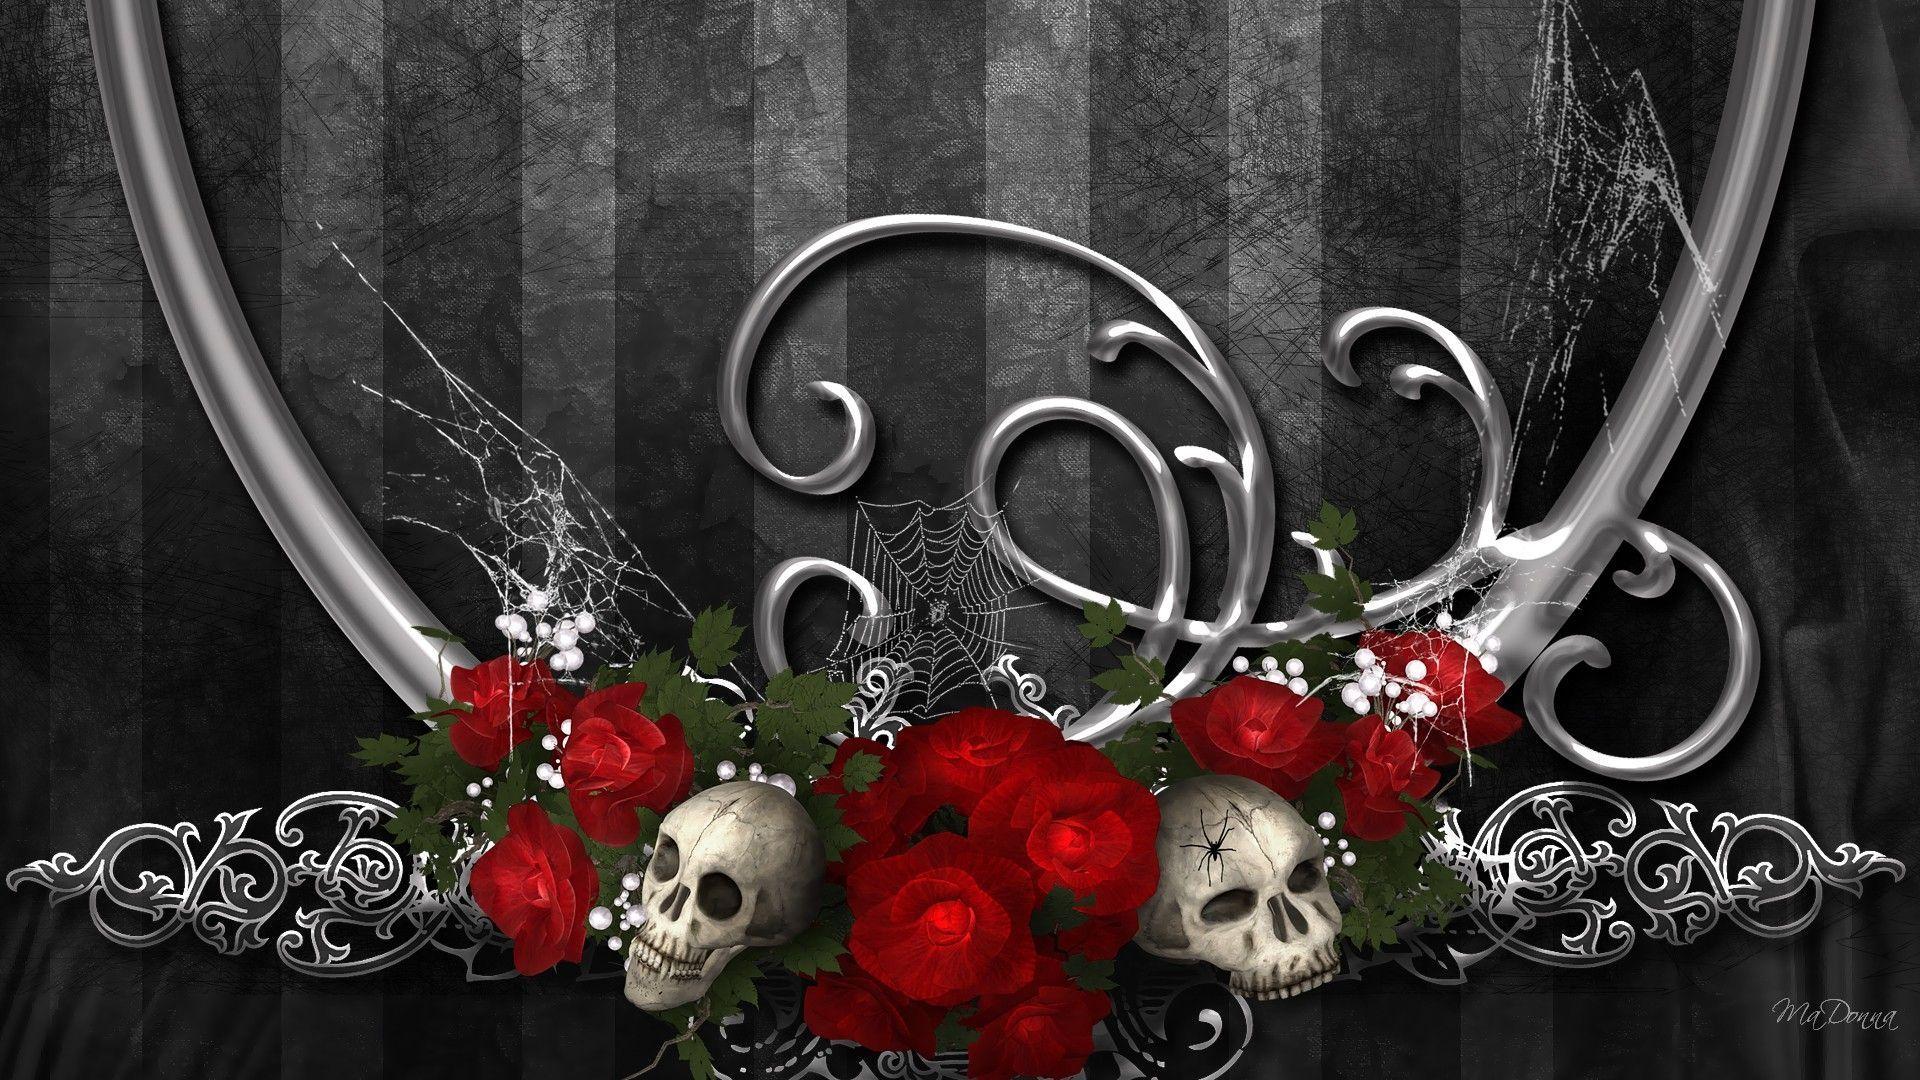 HD Roses Of Darkness Wallpaper. Download Free. Skull's